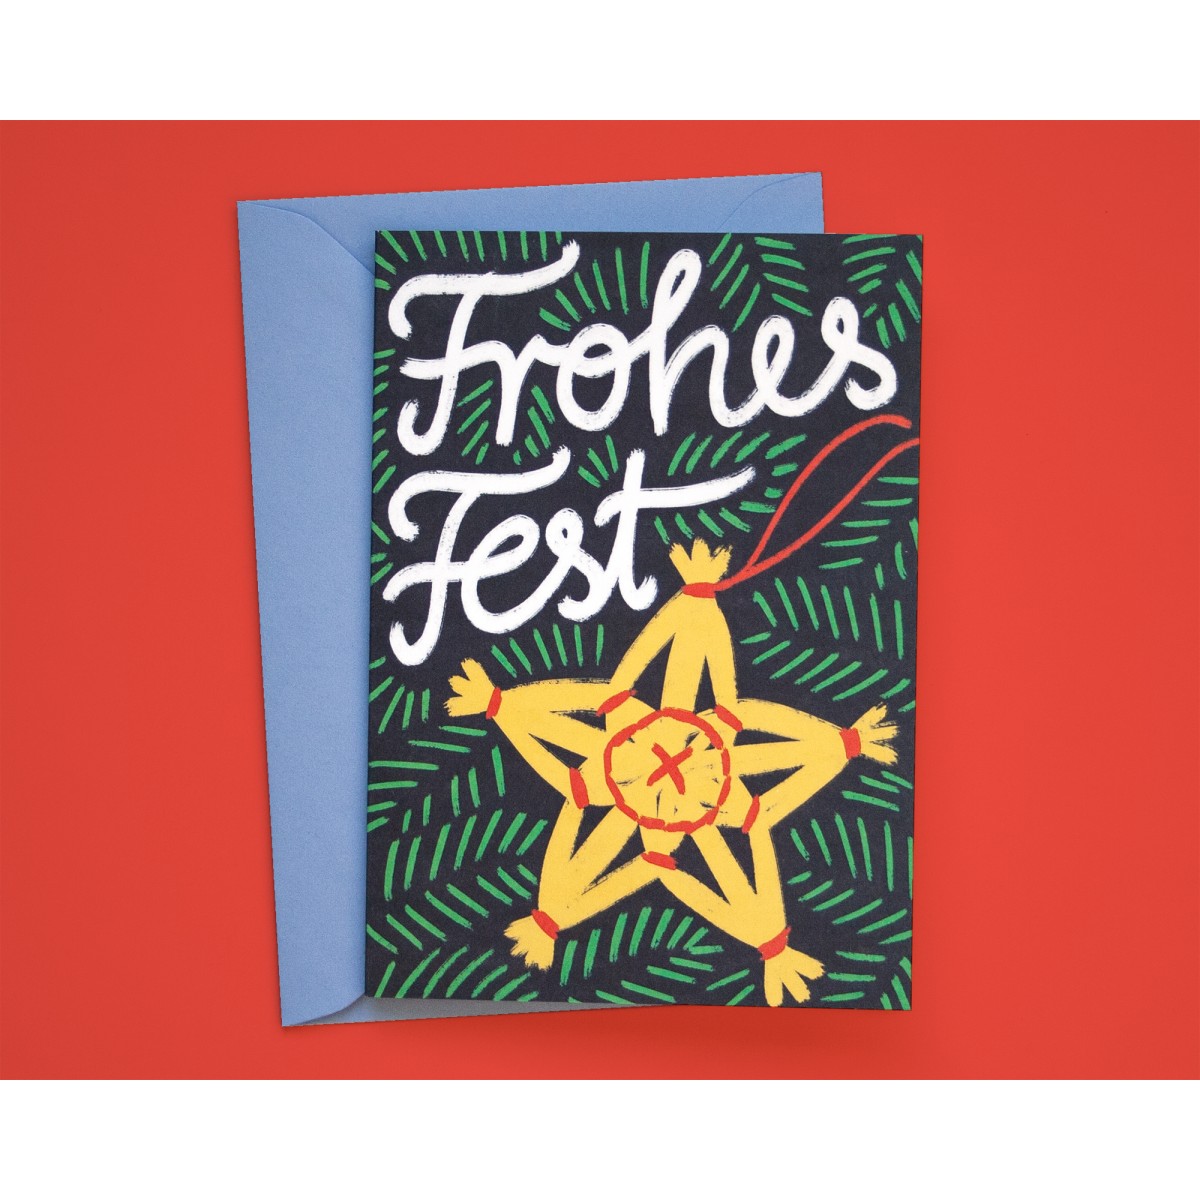 Weihnachtskarte Strohstern »Frohes Fest« // Papaya paper products